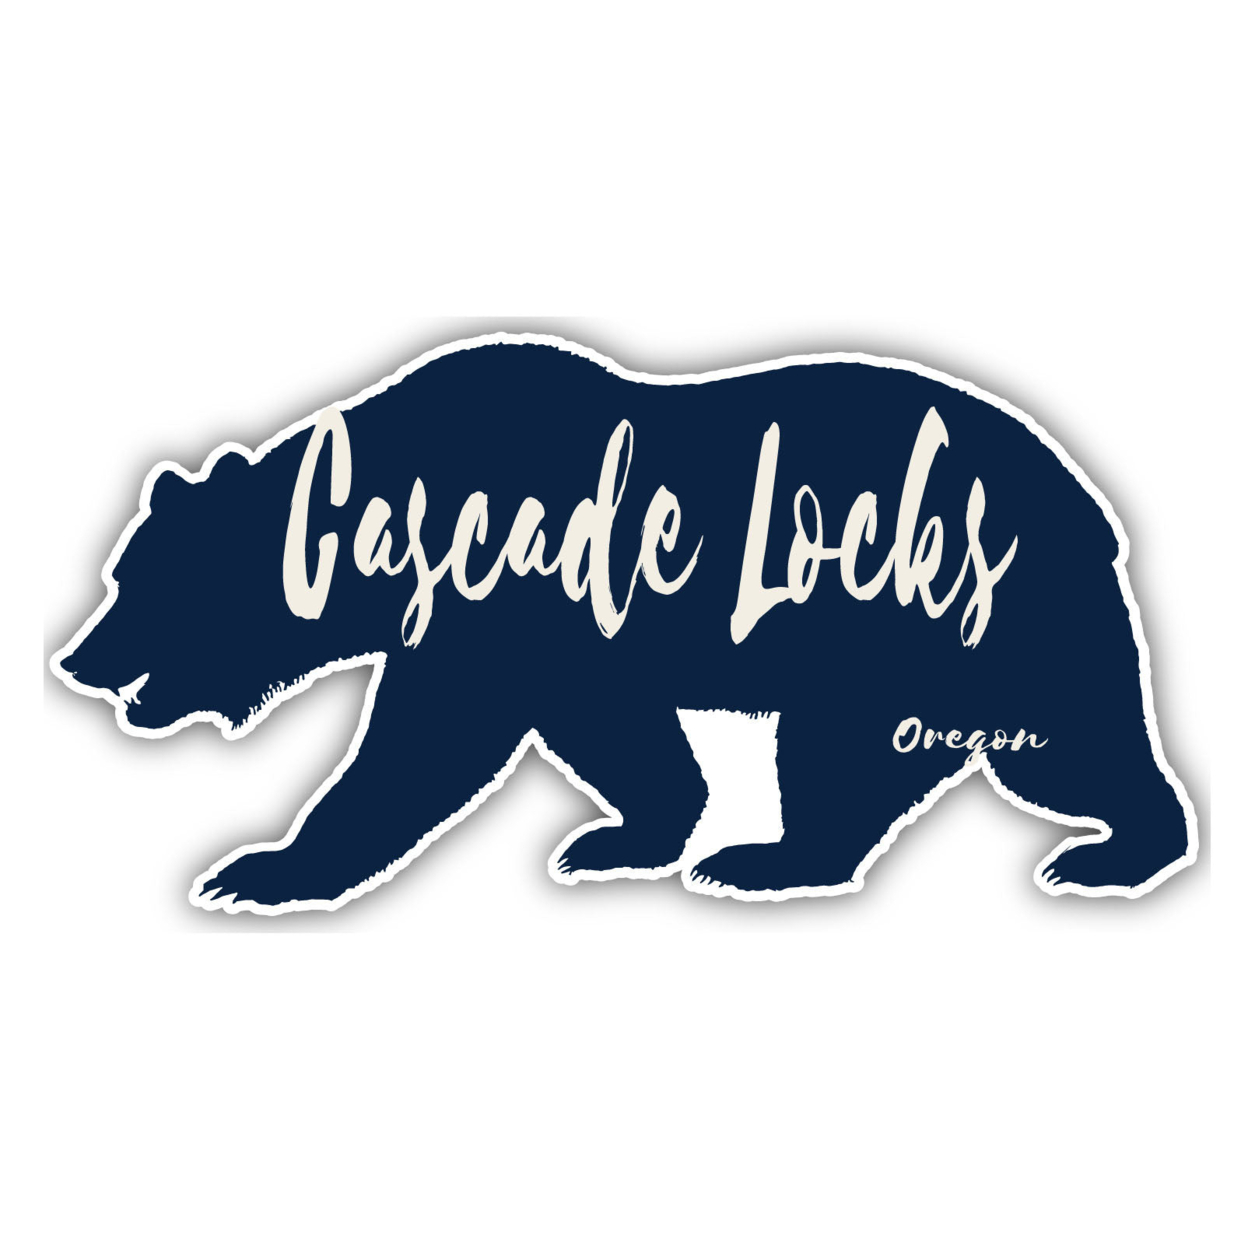 Cascade Locks Oregon Souvenir Decorative Stickers (Choose Theme And Size) - Single Unit, 4-Inch, Tent